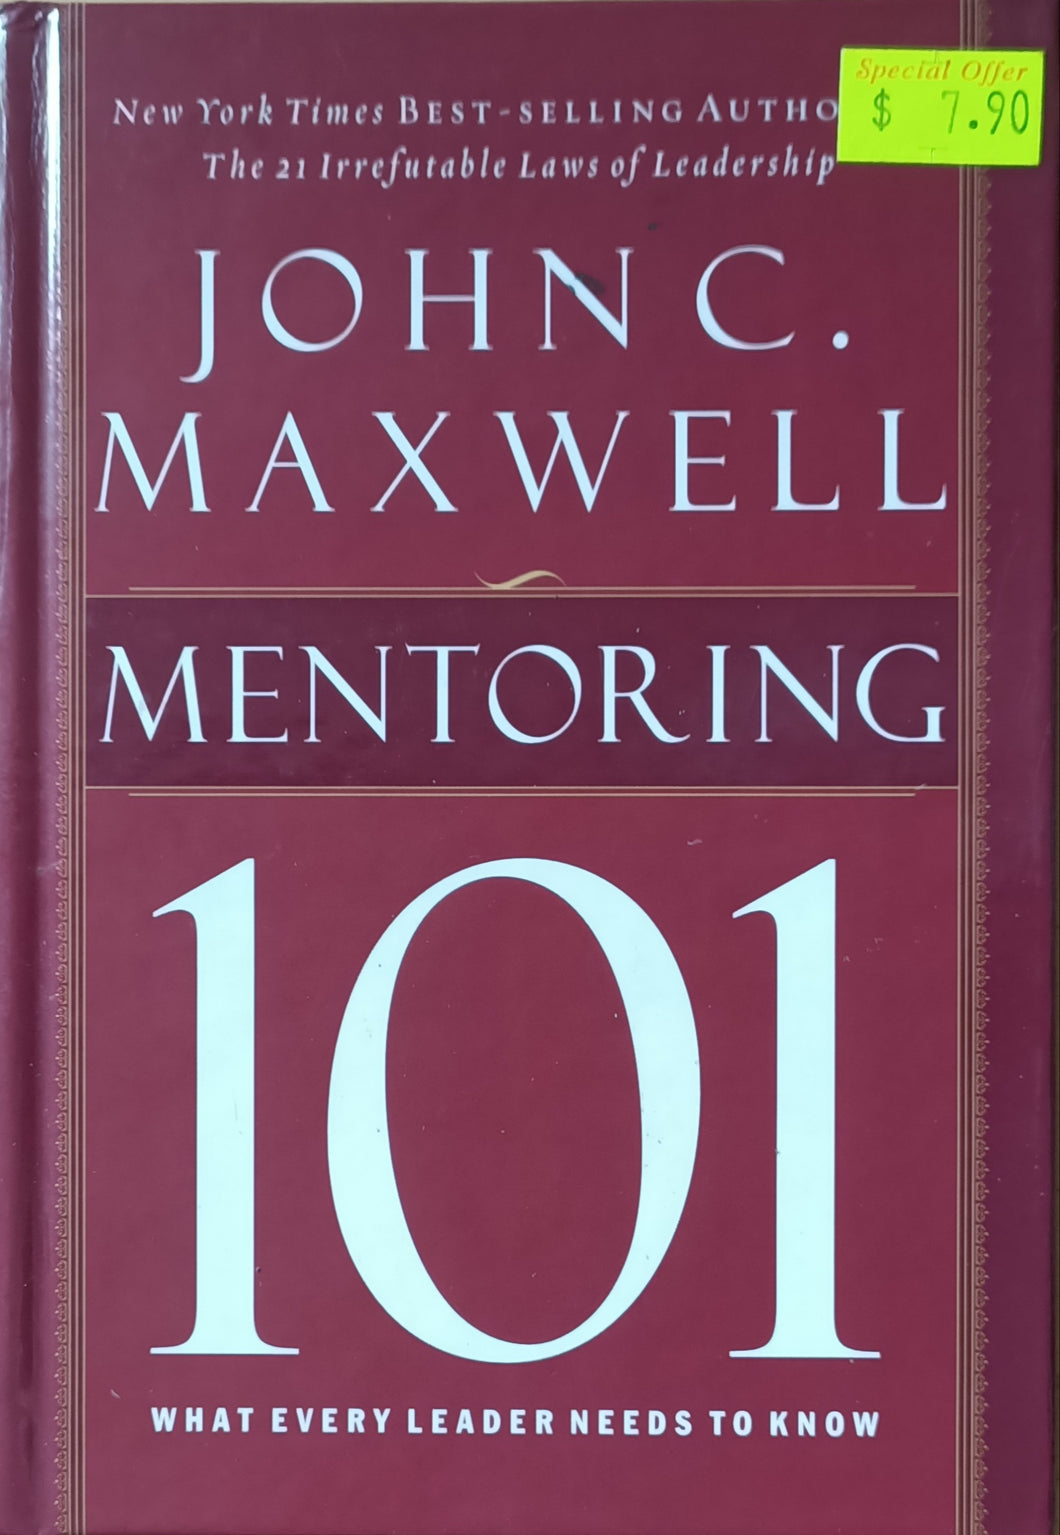 Mentoring 101 - John C. Maxwell